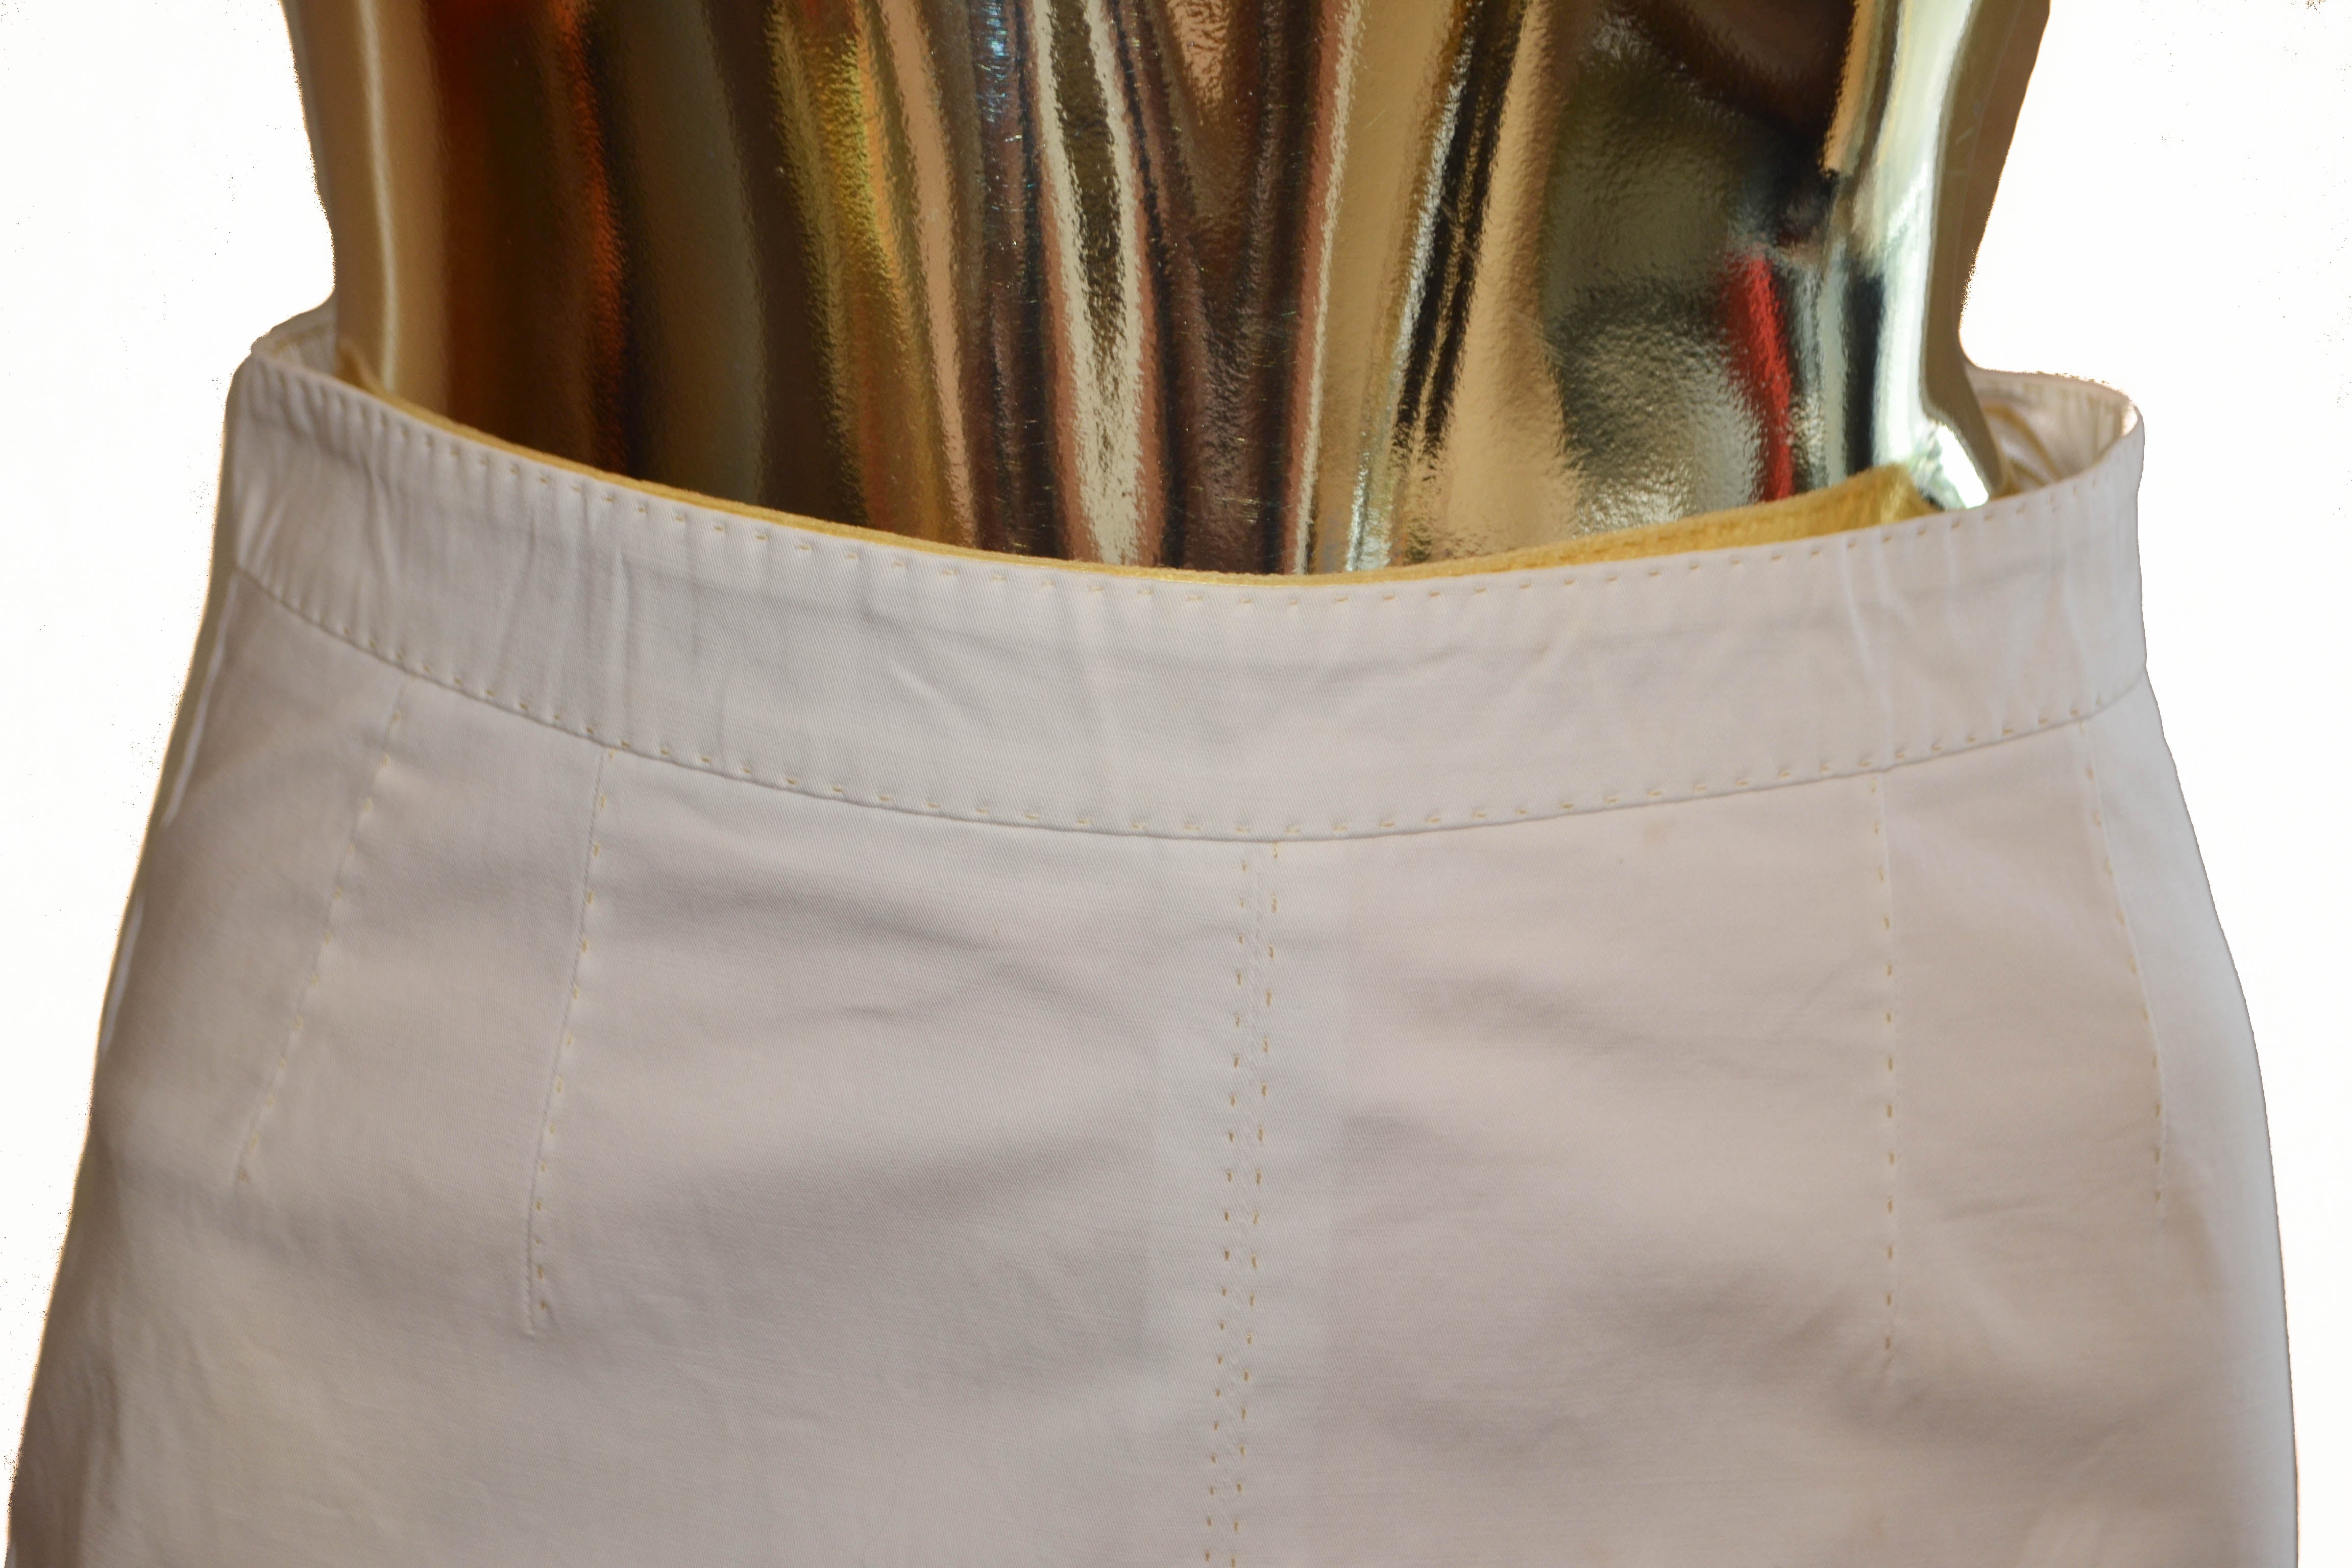 Authentic New Louis Vuitton Women's White Skirt Size 36